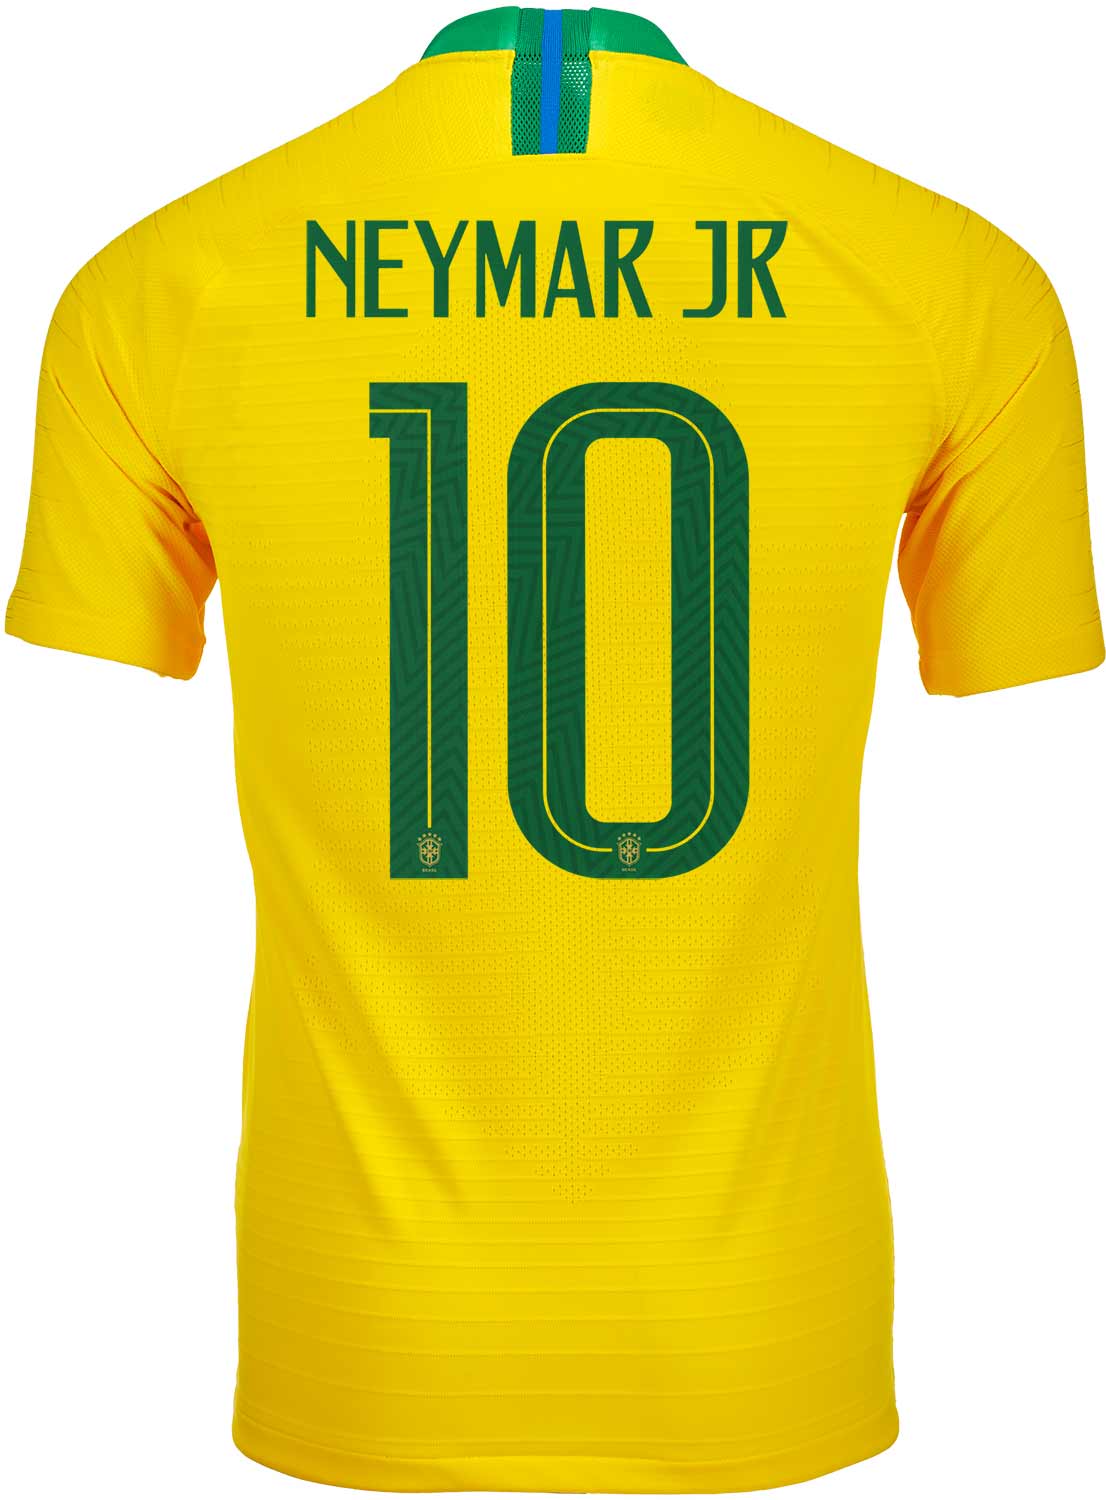 neymar jr brazil jersey